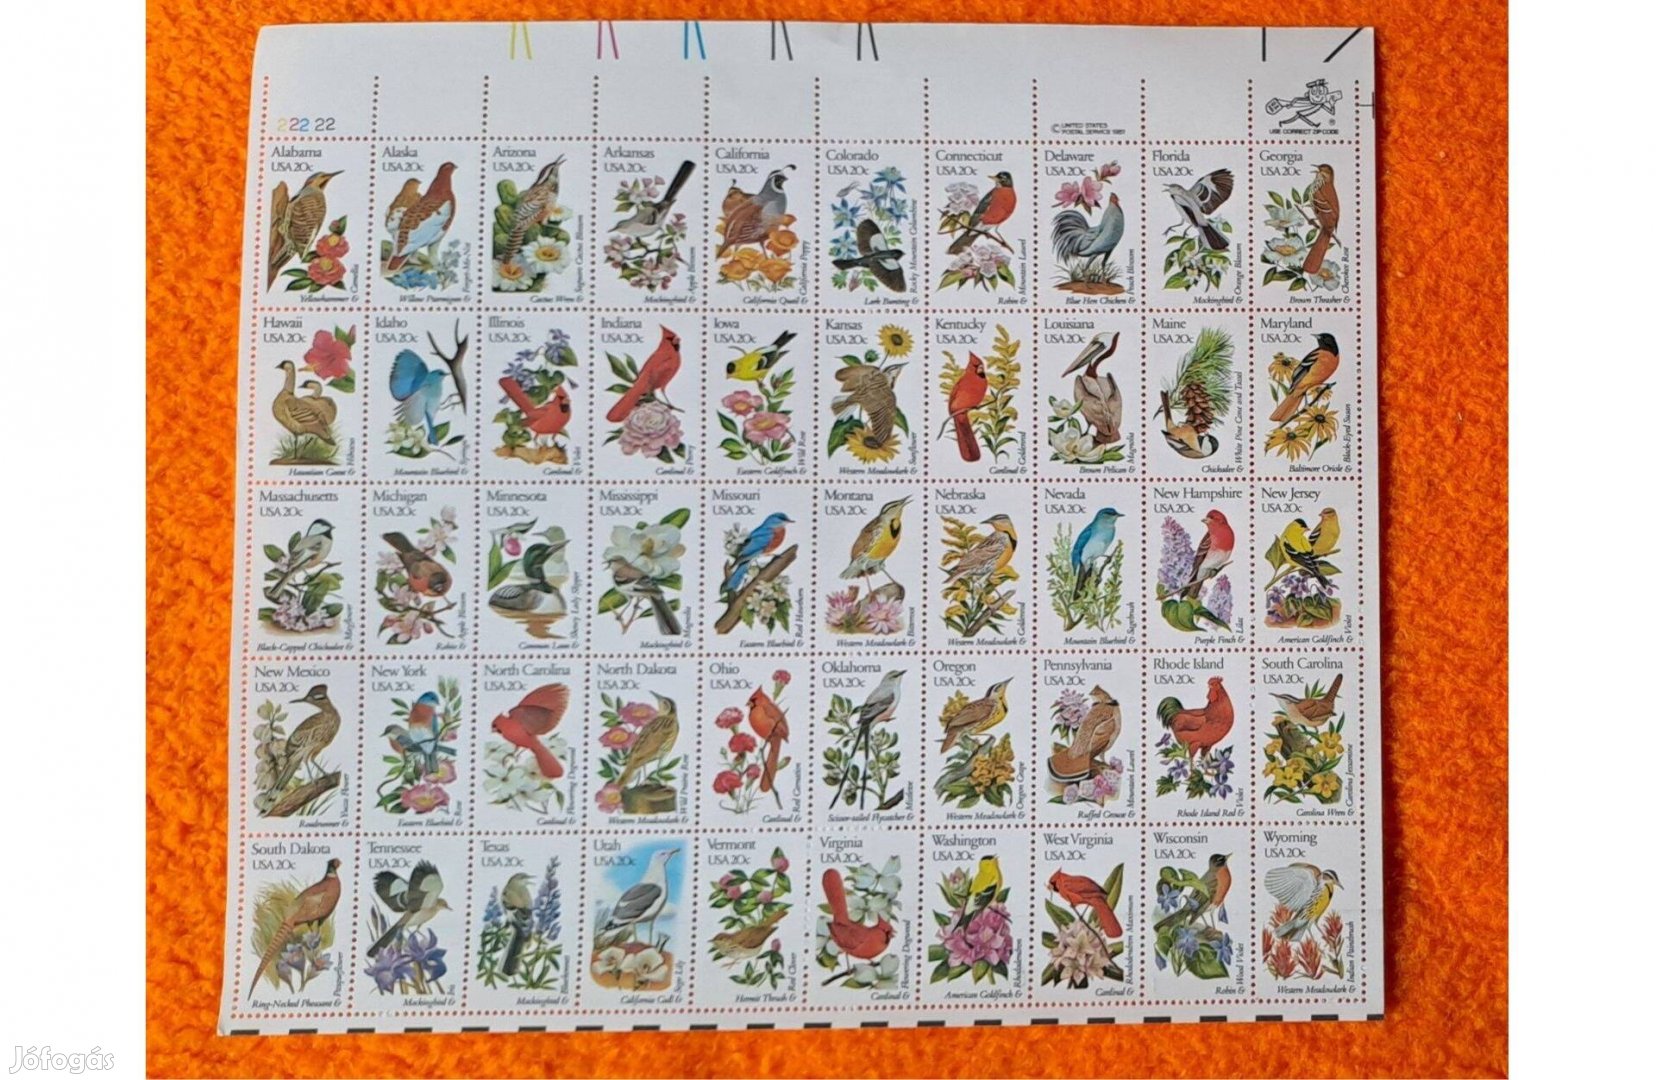 Postai bélyeg sorozat - 50 db USA tagállam madara mappában